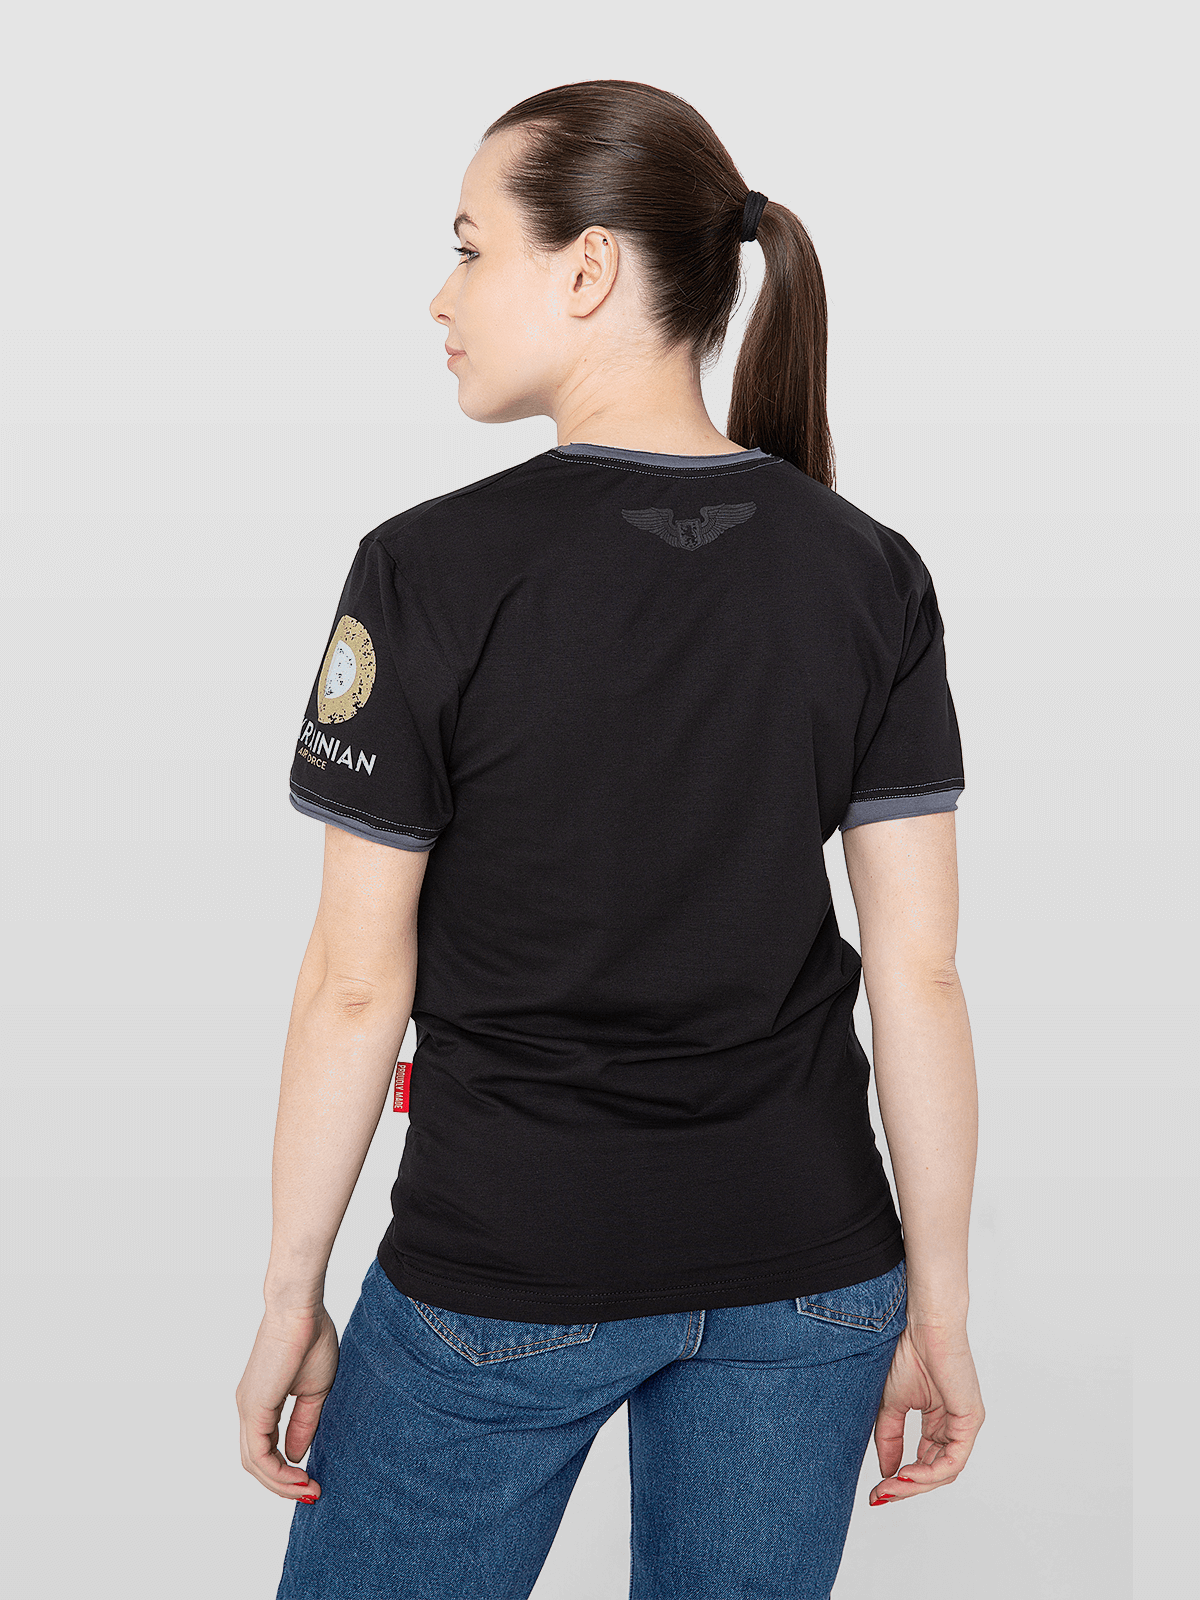 Women's T-Shirt 114 Brigade. Color black. 1.